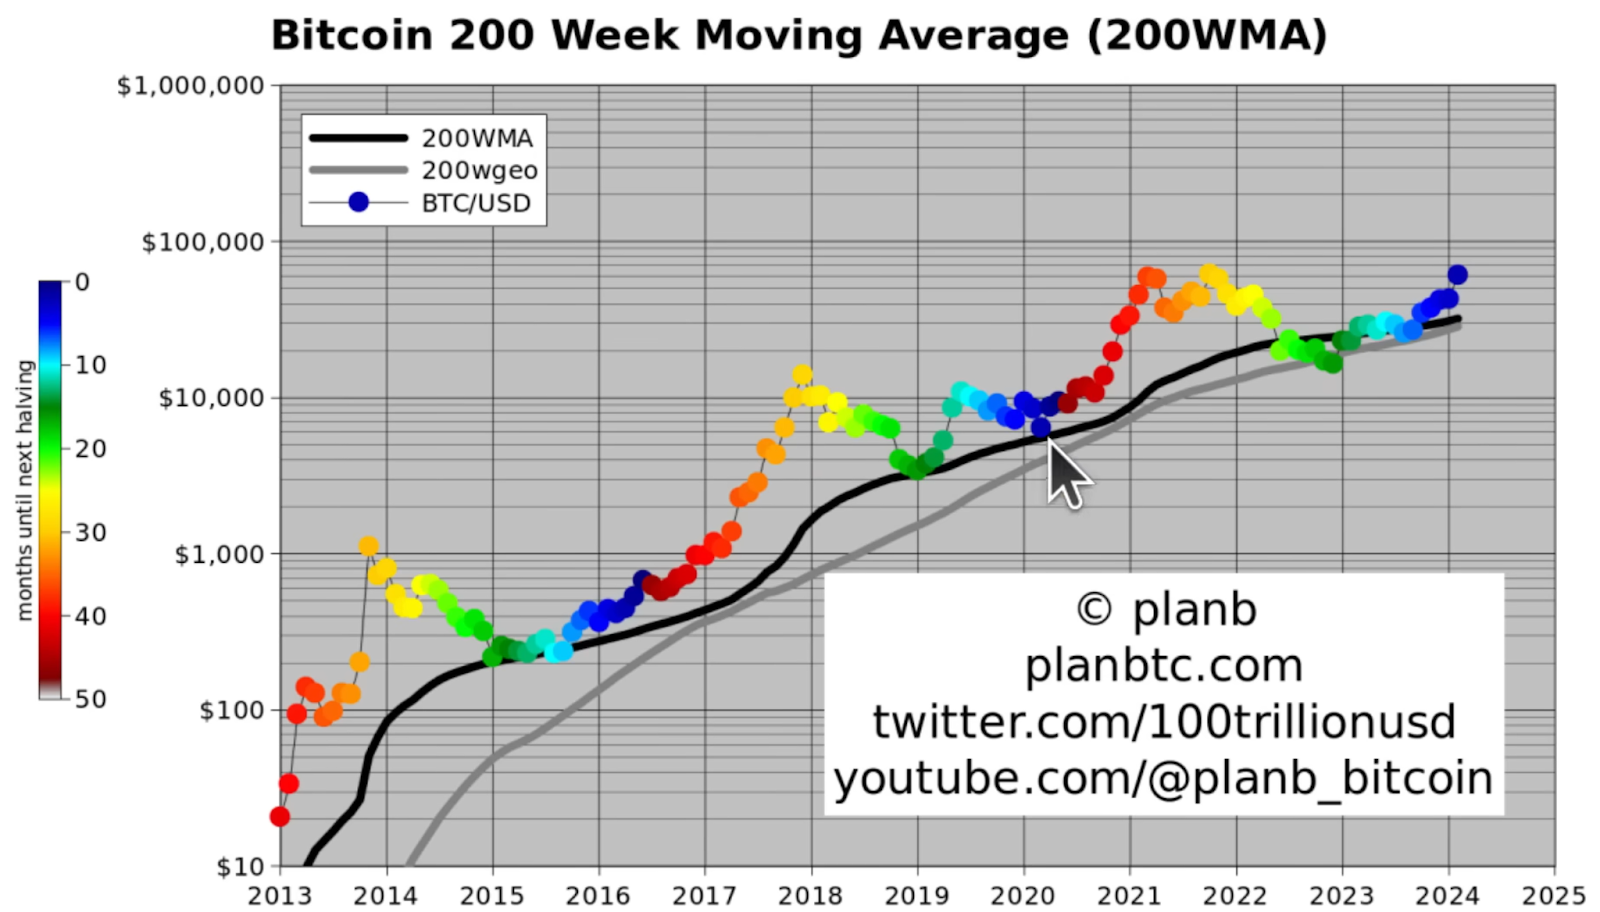 200 Week Moving Average (MA) Chart via Plan B on Youtube

